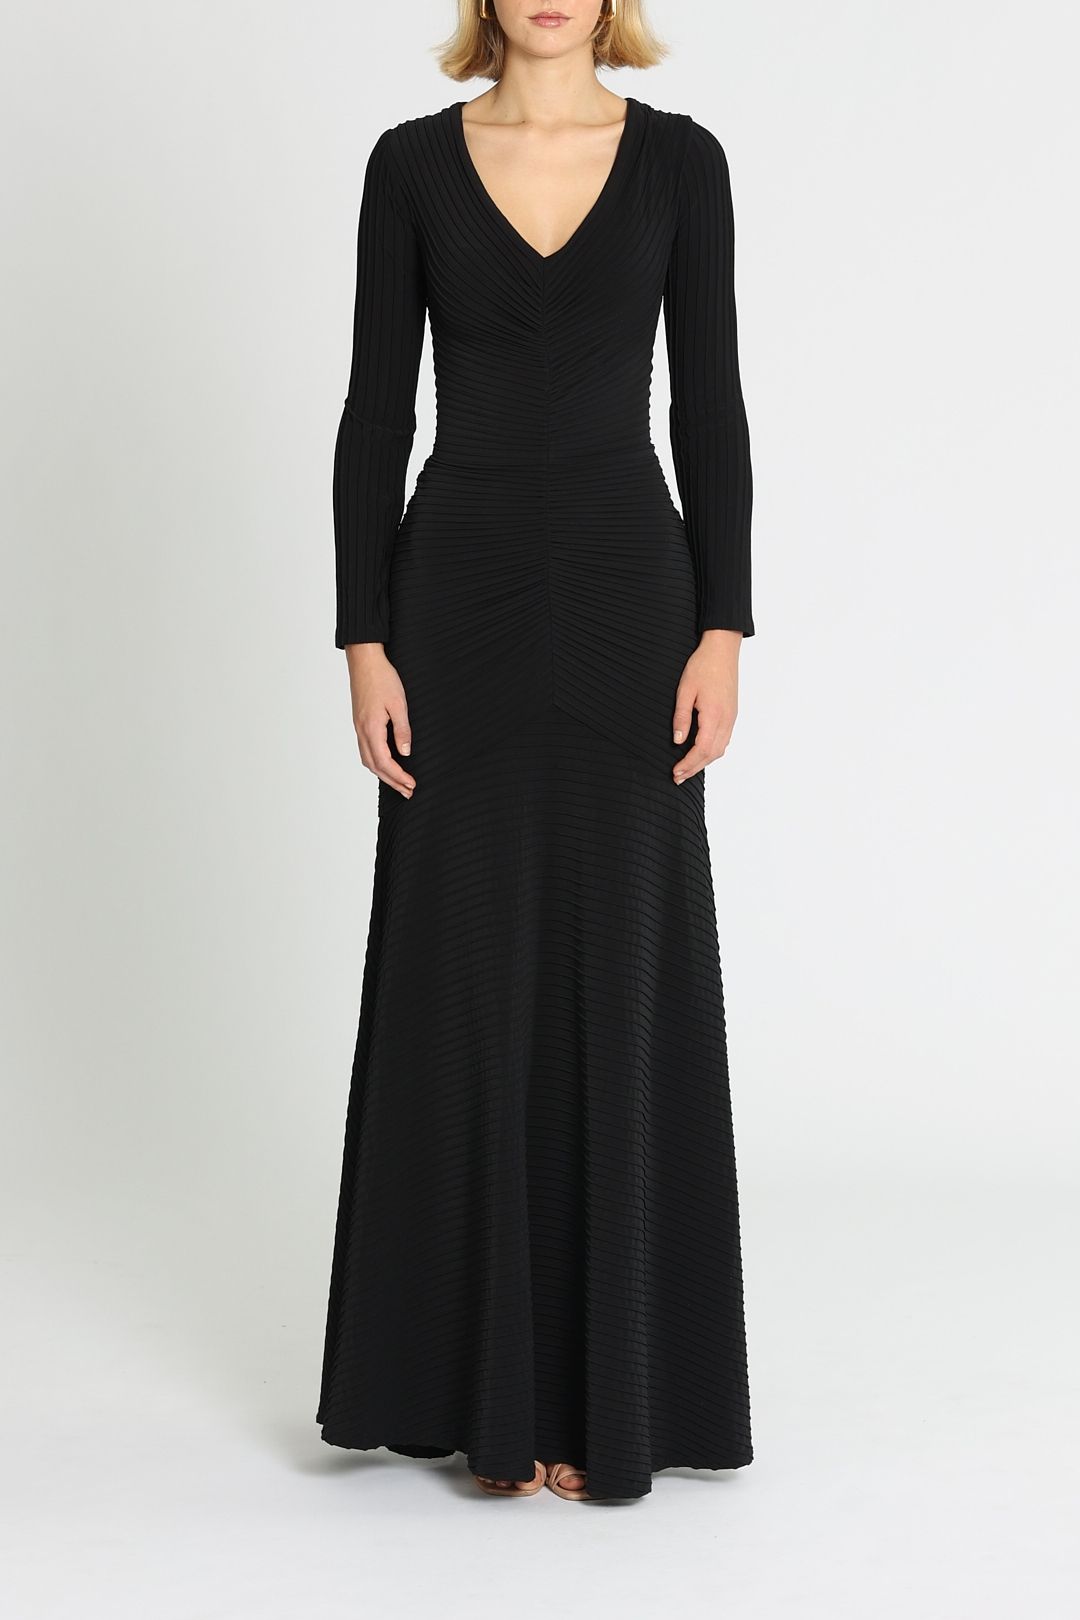 Amaryllis Gown - Black by Pasduchas for Rent | GlamCorner